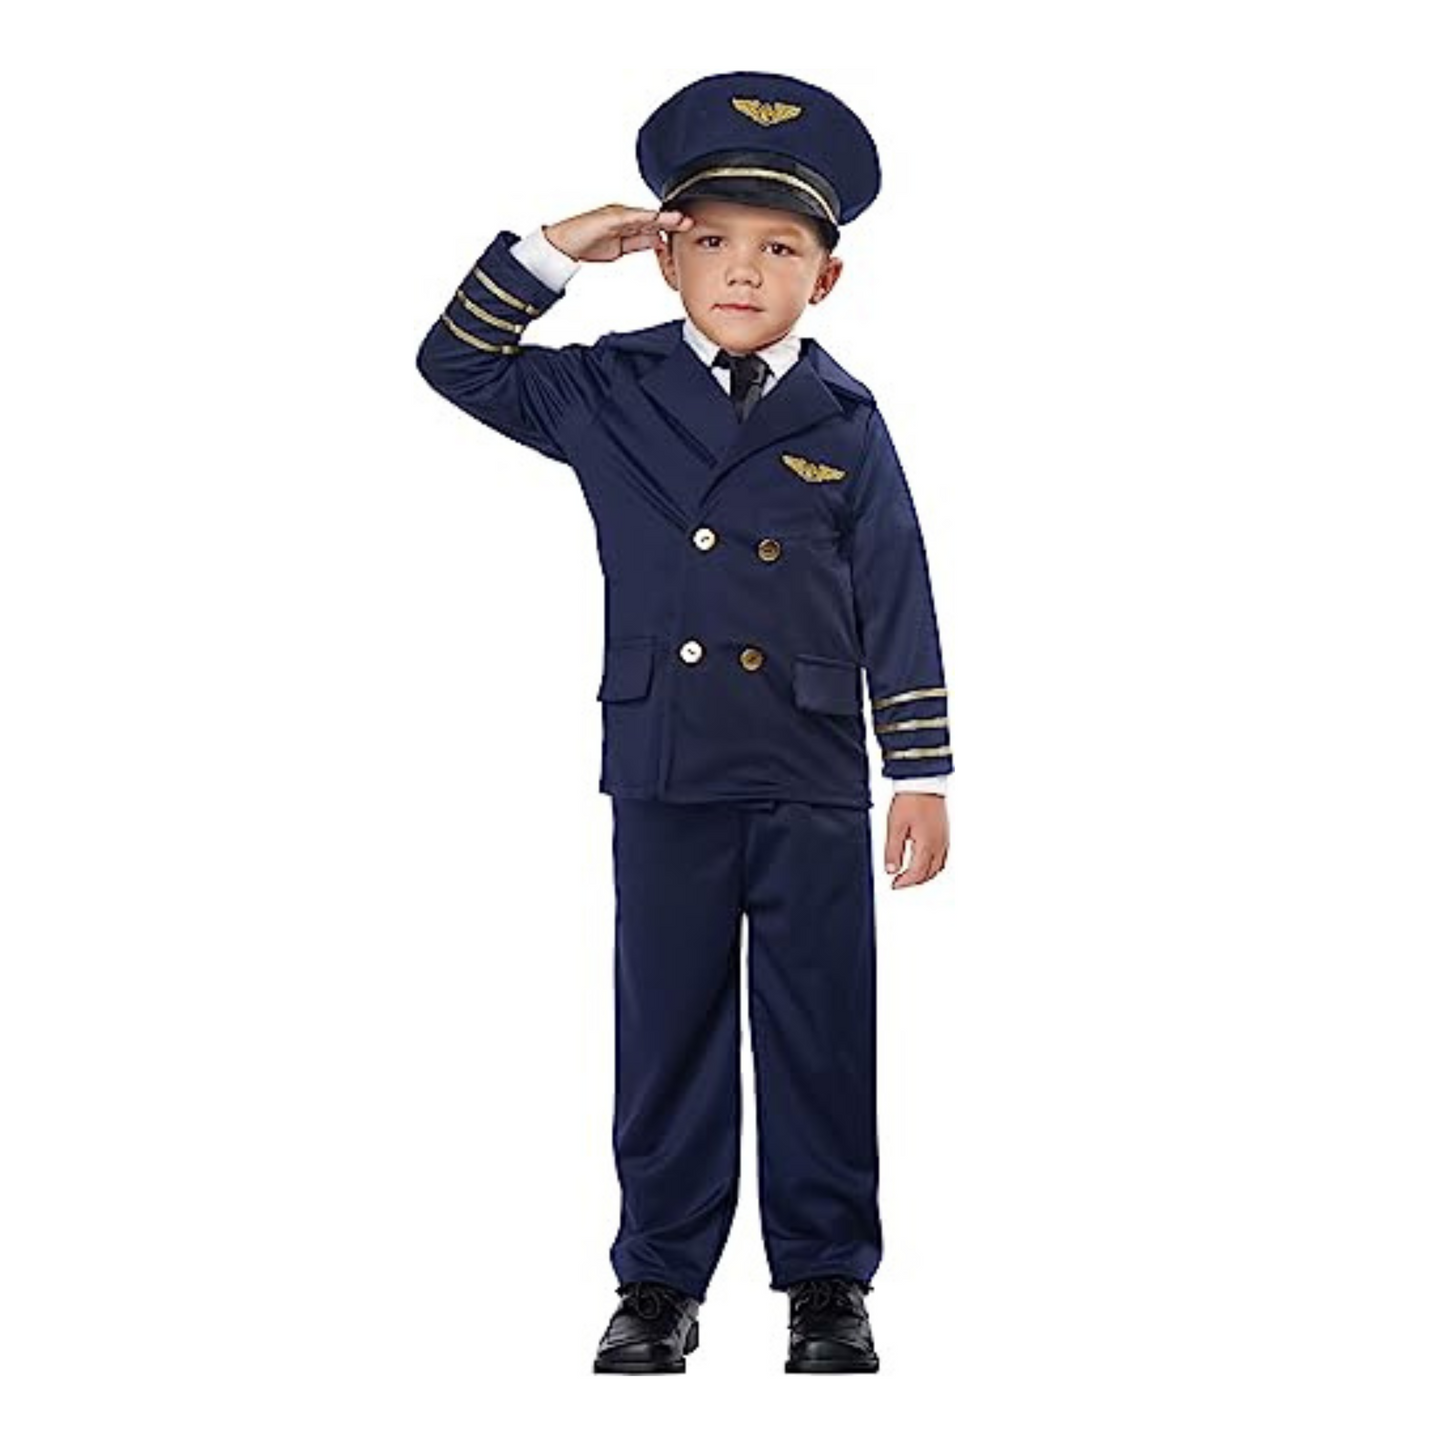 Role Playing Pilot Costume Set